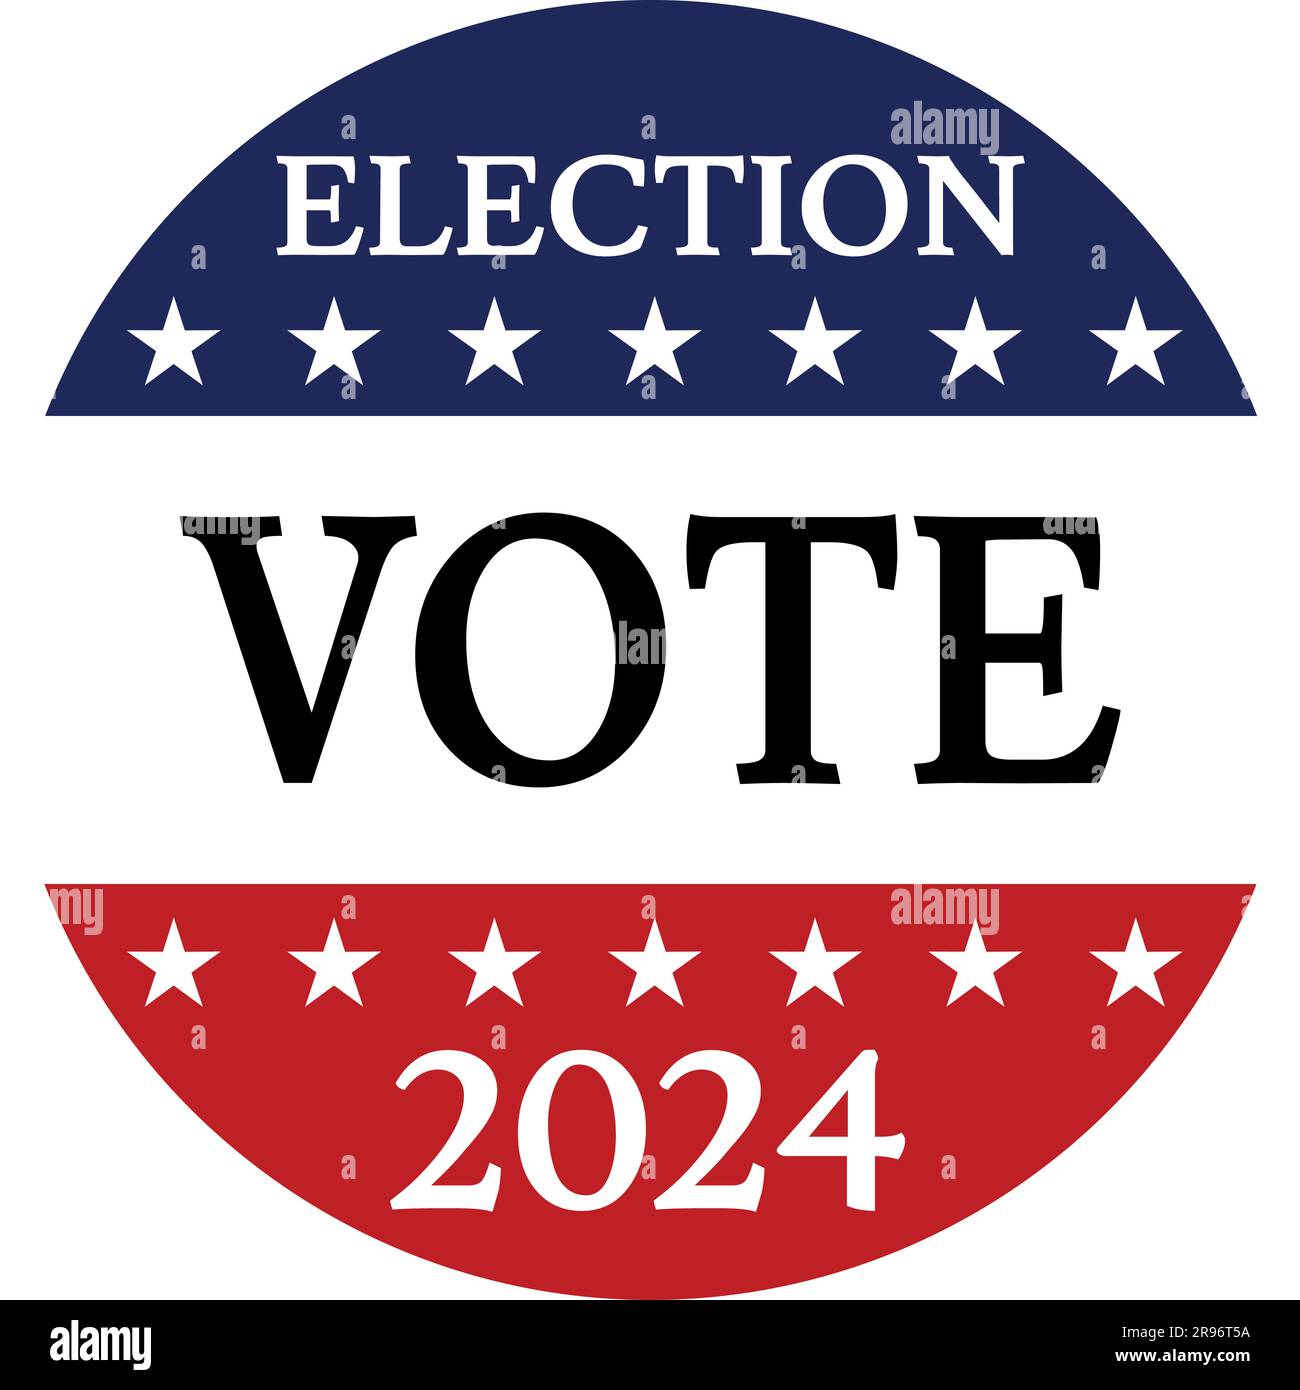 USA election 2024 vector design for pin, badge or campaign button Stock